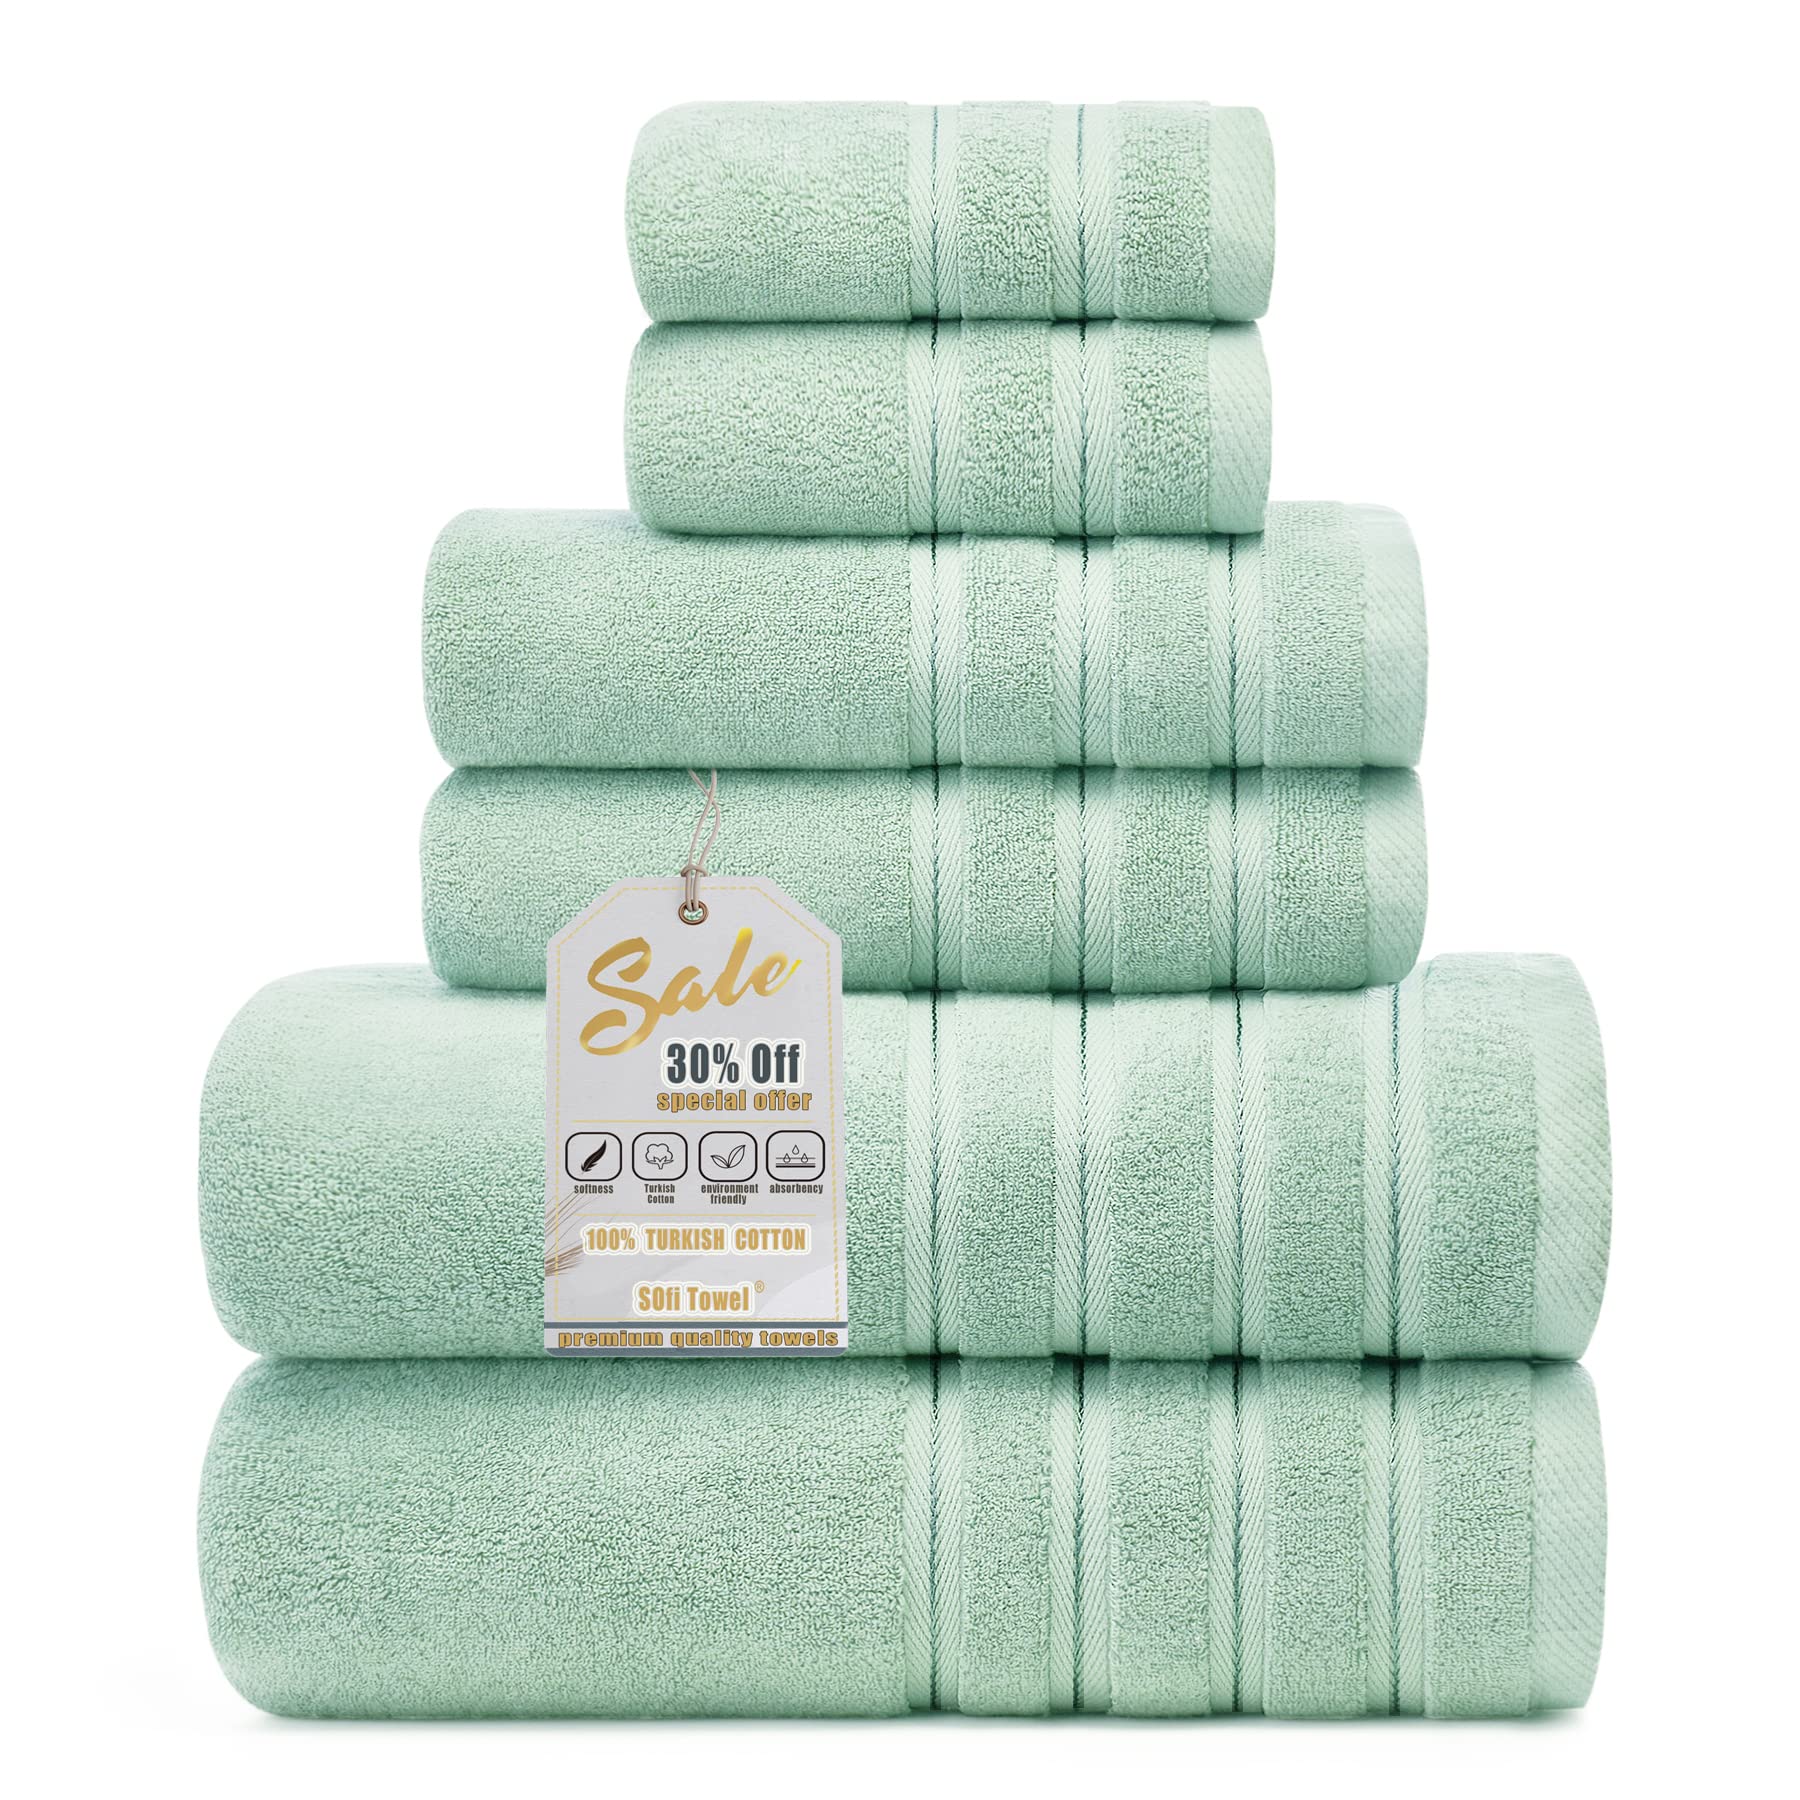 Sofi Towel 1 Luxury Turkish Towels Bathroom Sets clearance 6 Piece Bath  Towel Set - 2 Bath Towels, 2 Hand Towels, 2 Washcloths, Super Soft Hi